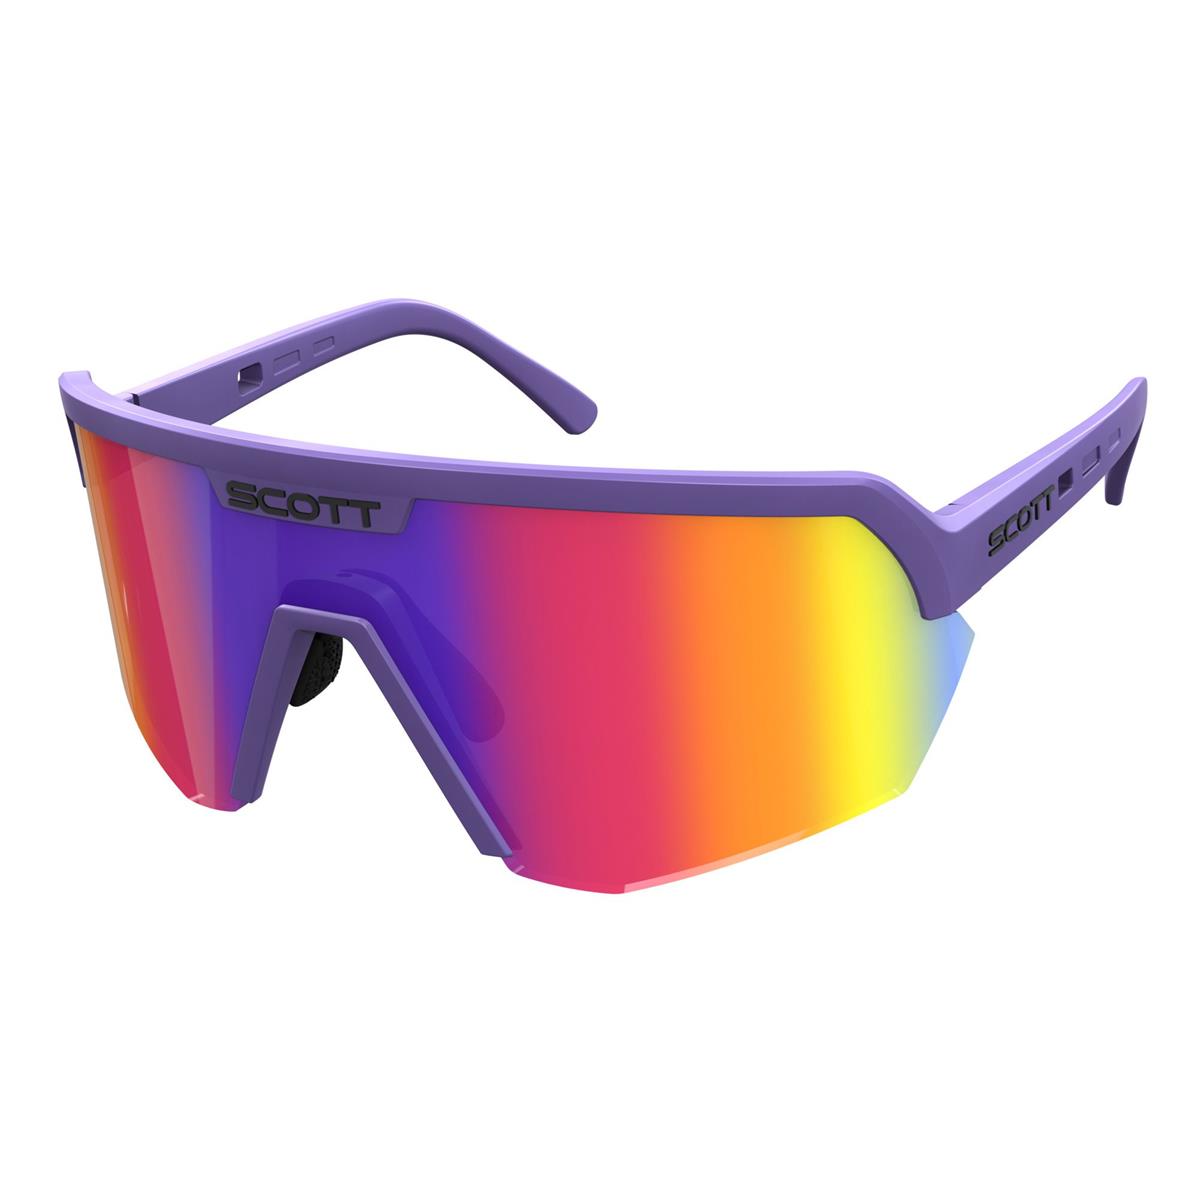 Scott Sportbrille Sport Shield Ultra Purple - Teal Chrome